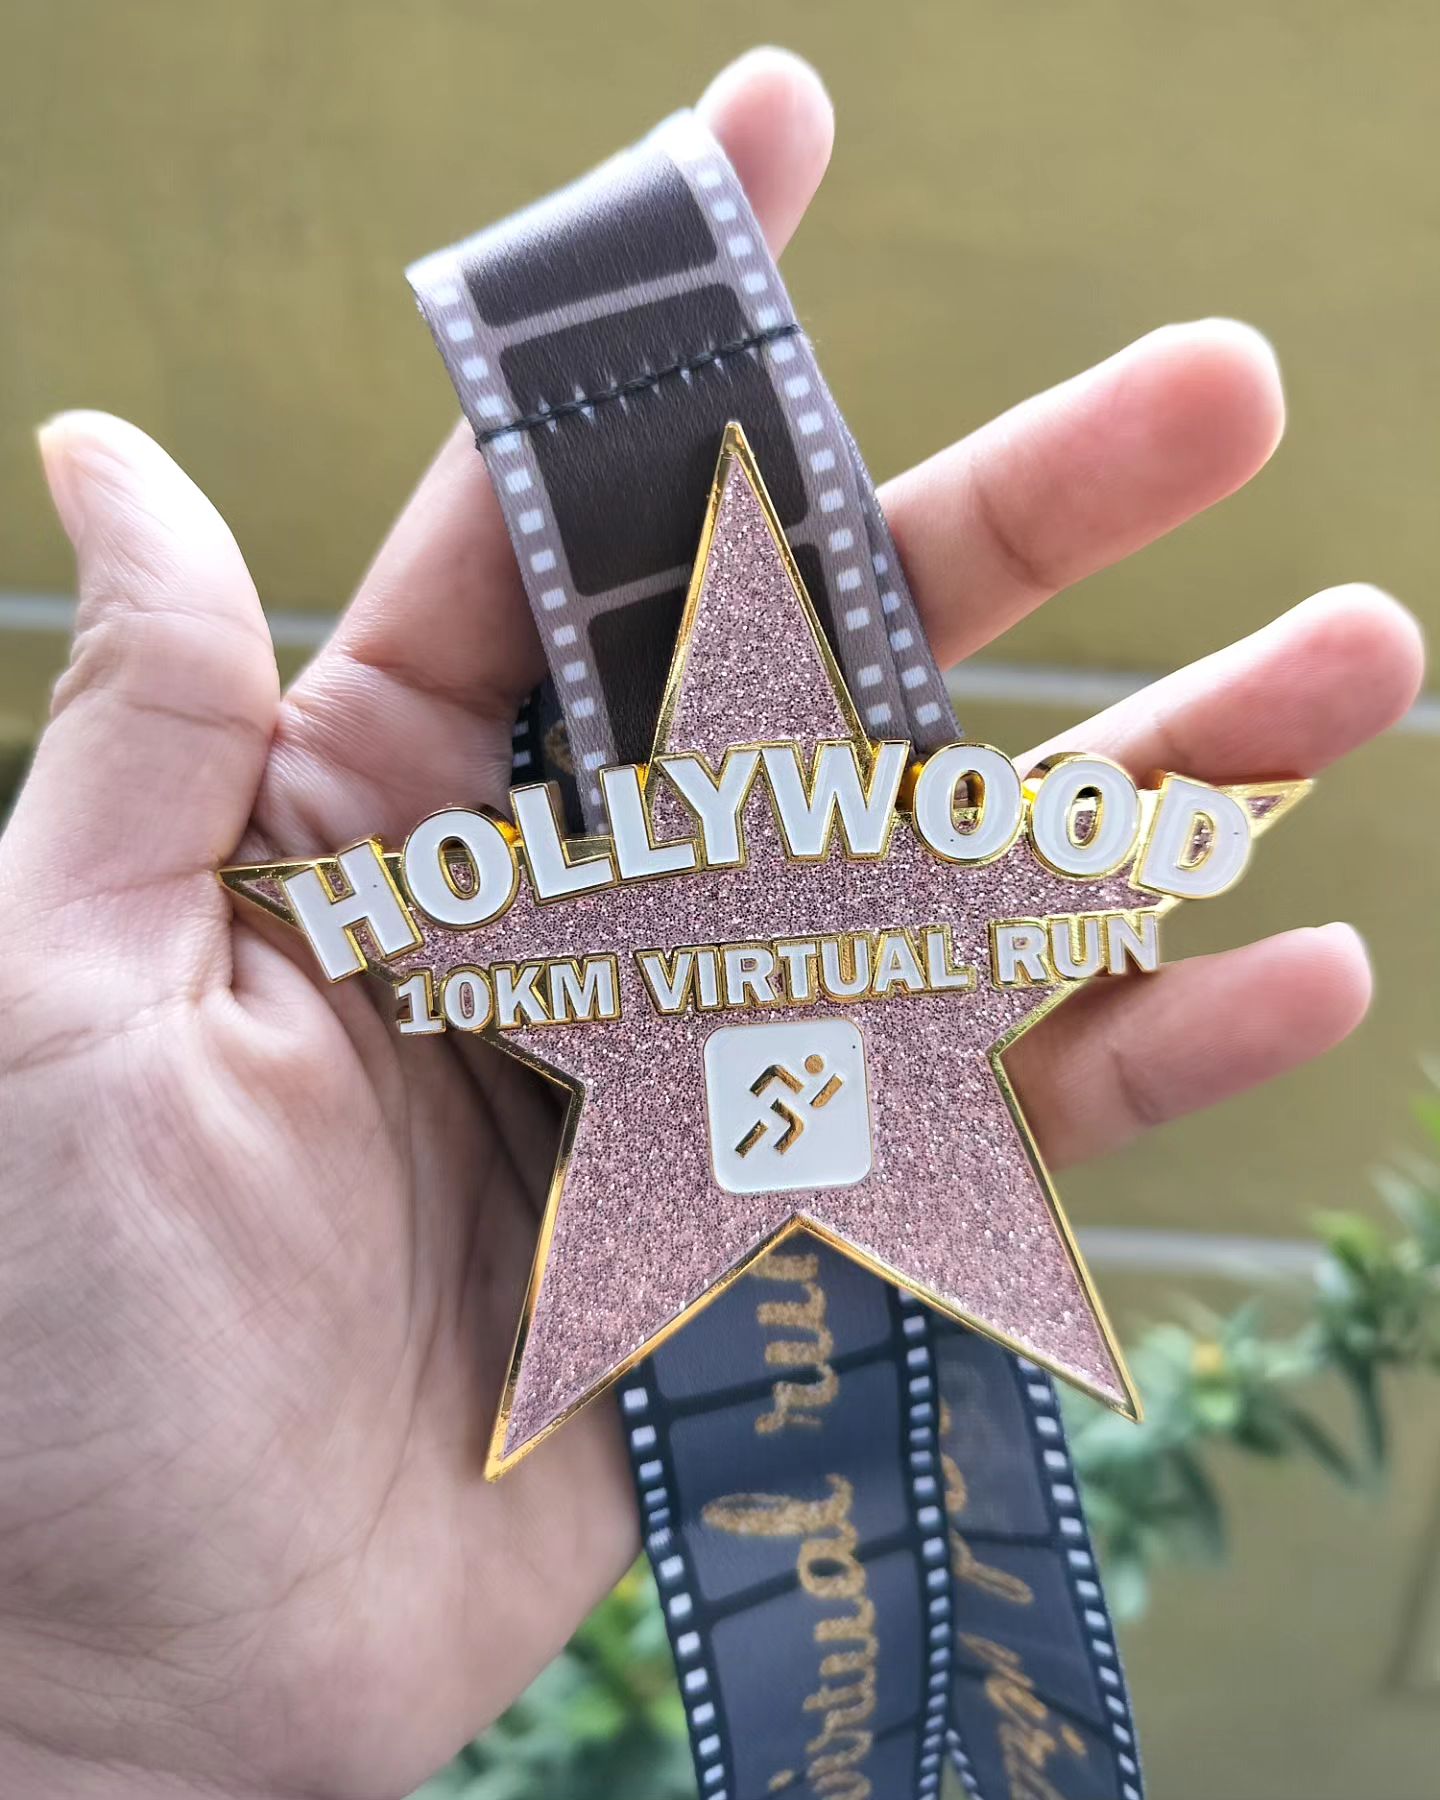 Hollywood Virtual Run